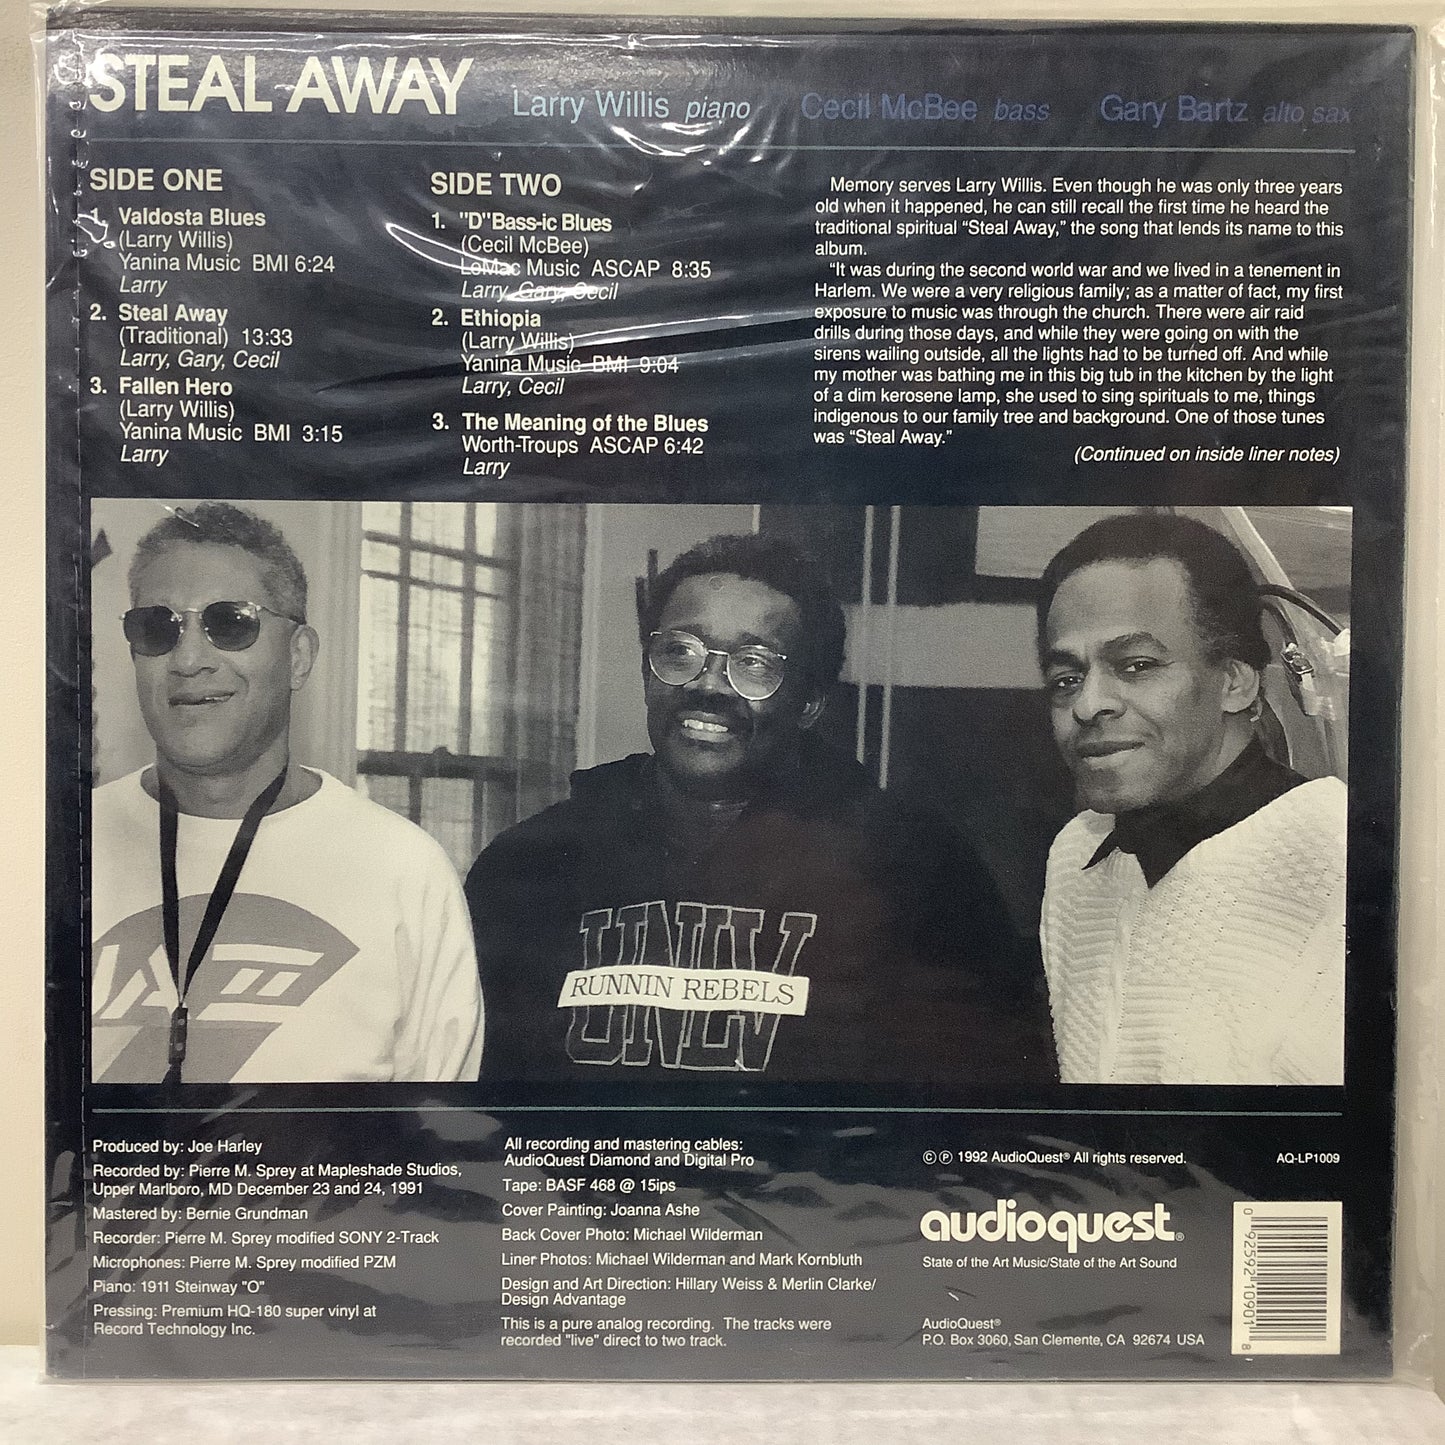 Larry Willis - Steal Away - Audioquest LP